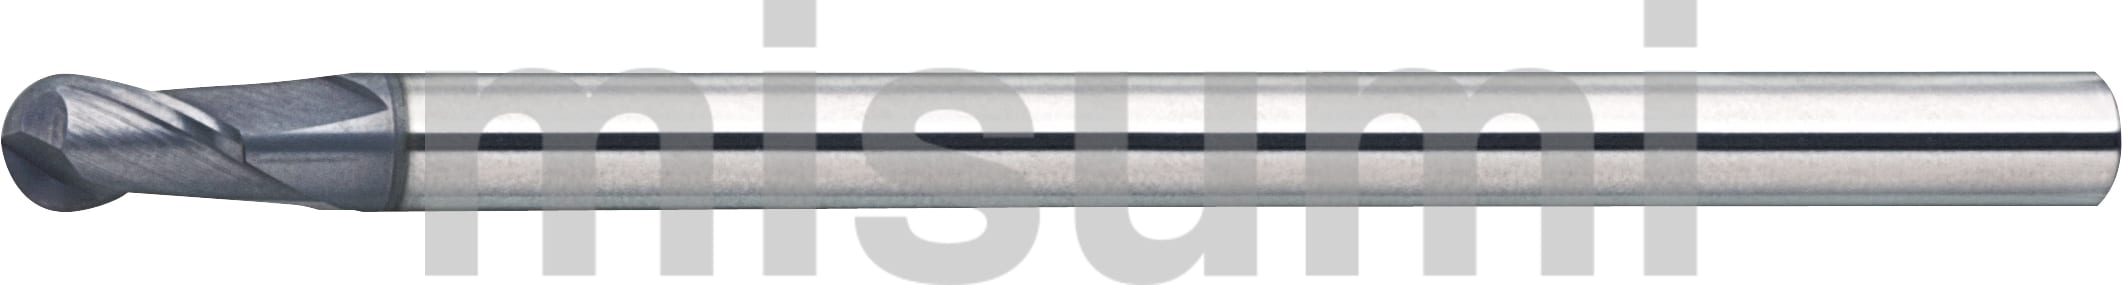 MRCシリーズ超硬ボールエンドミル 調質鋼加工用/2枚刃/ショートタイプ